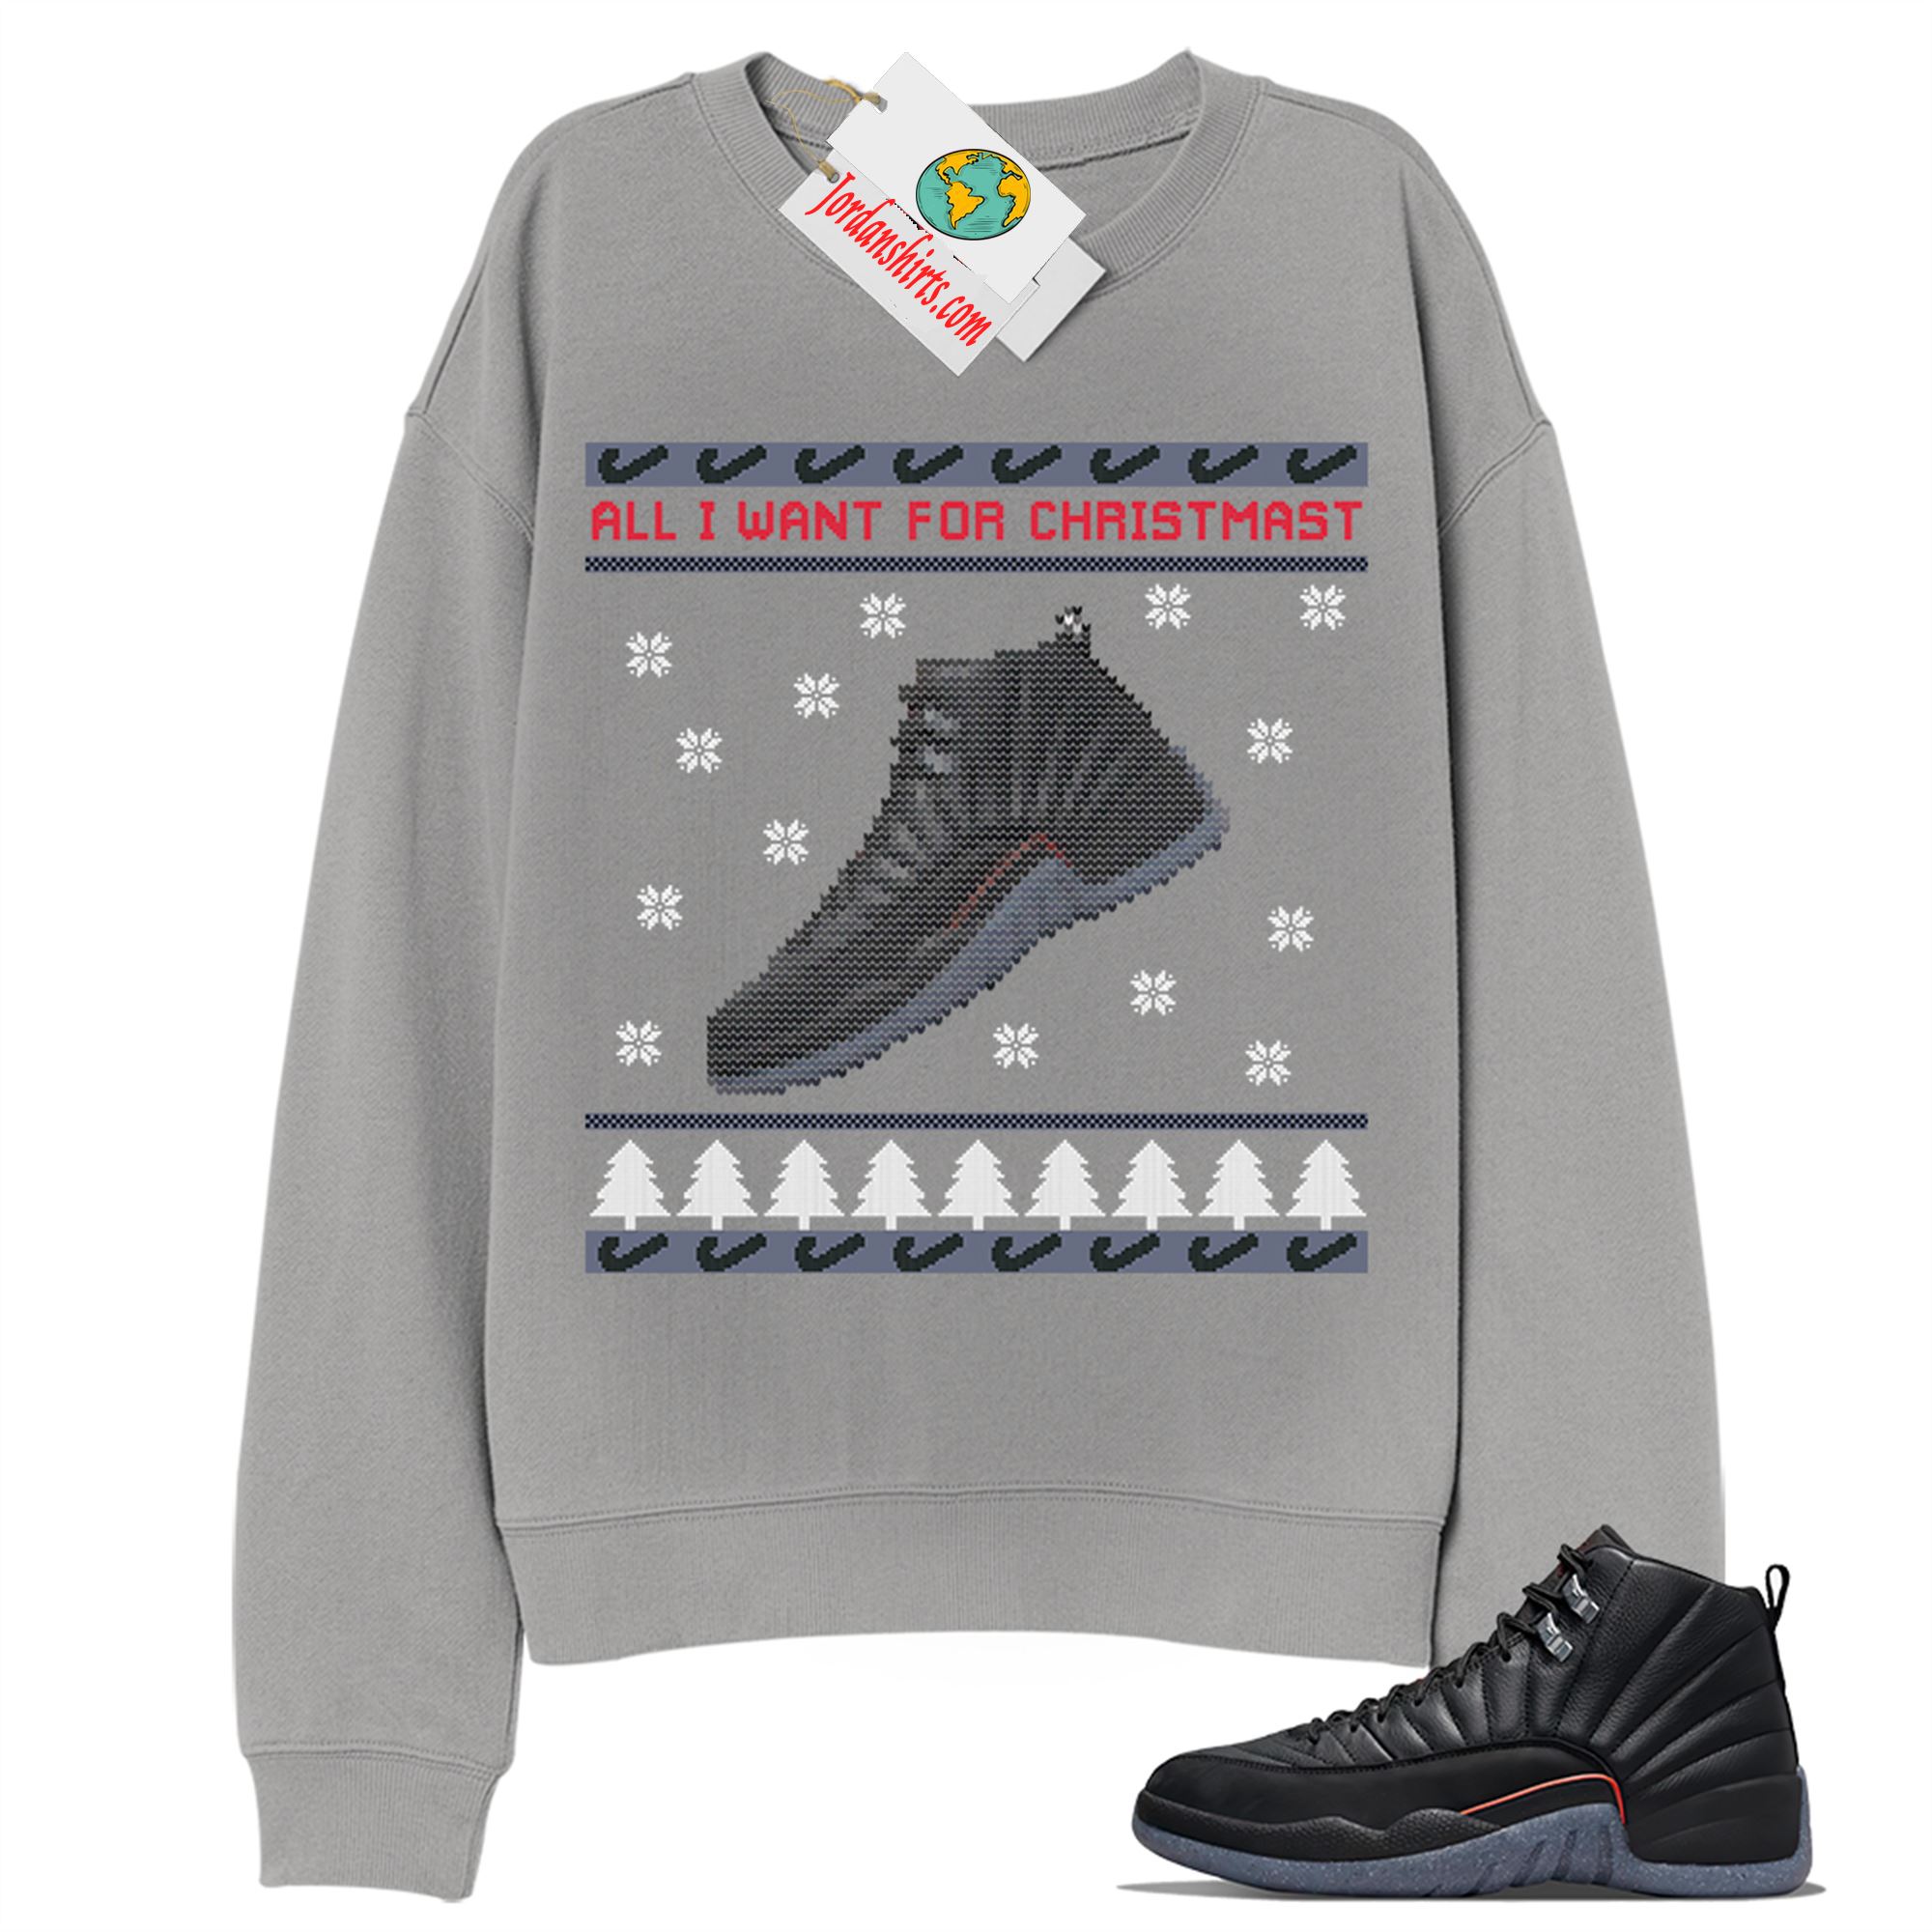 Jordan 12 Sweatshirt, Sneaker Ugly Christmas Shirt Grey Sweatshirt Air Jordan 12 Utility Grind 12s Plus Size Up To 5xl